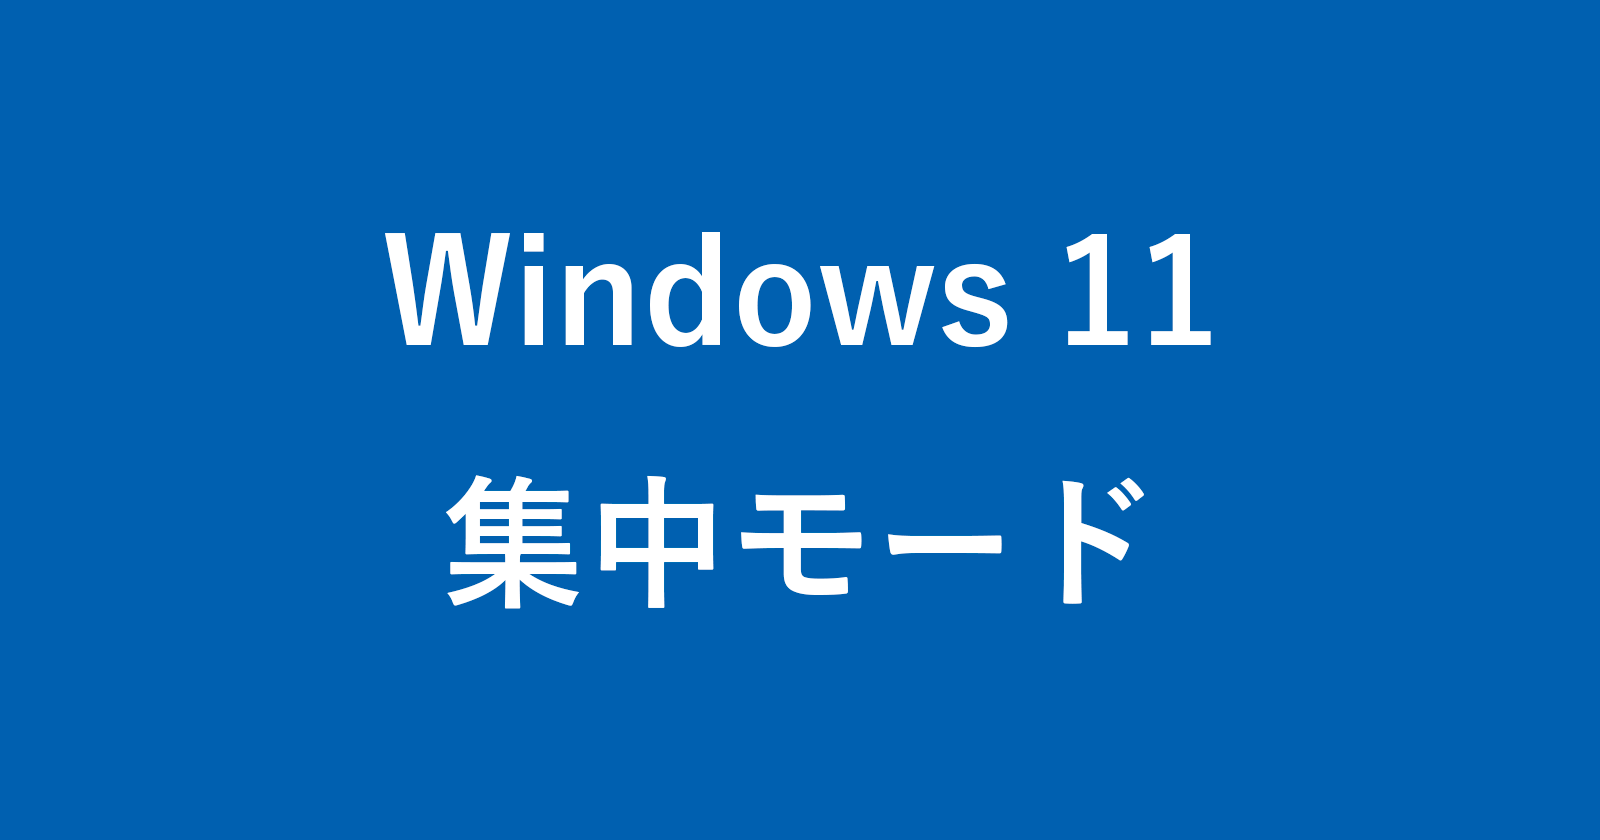 windows 11 focut assist